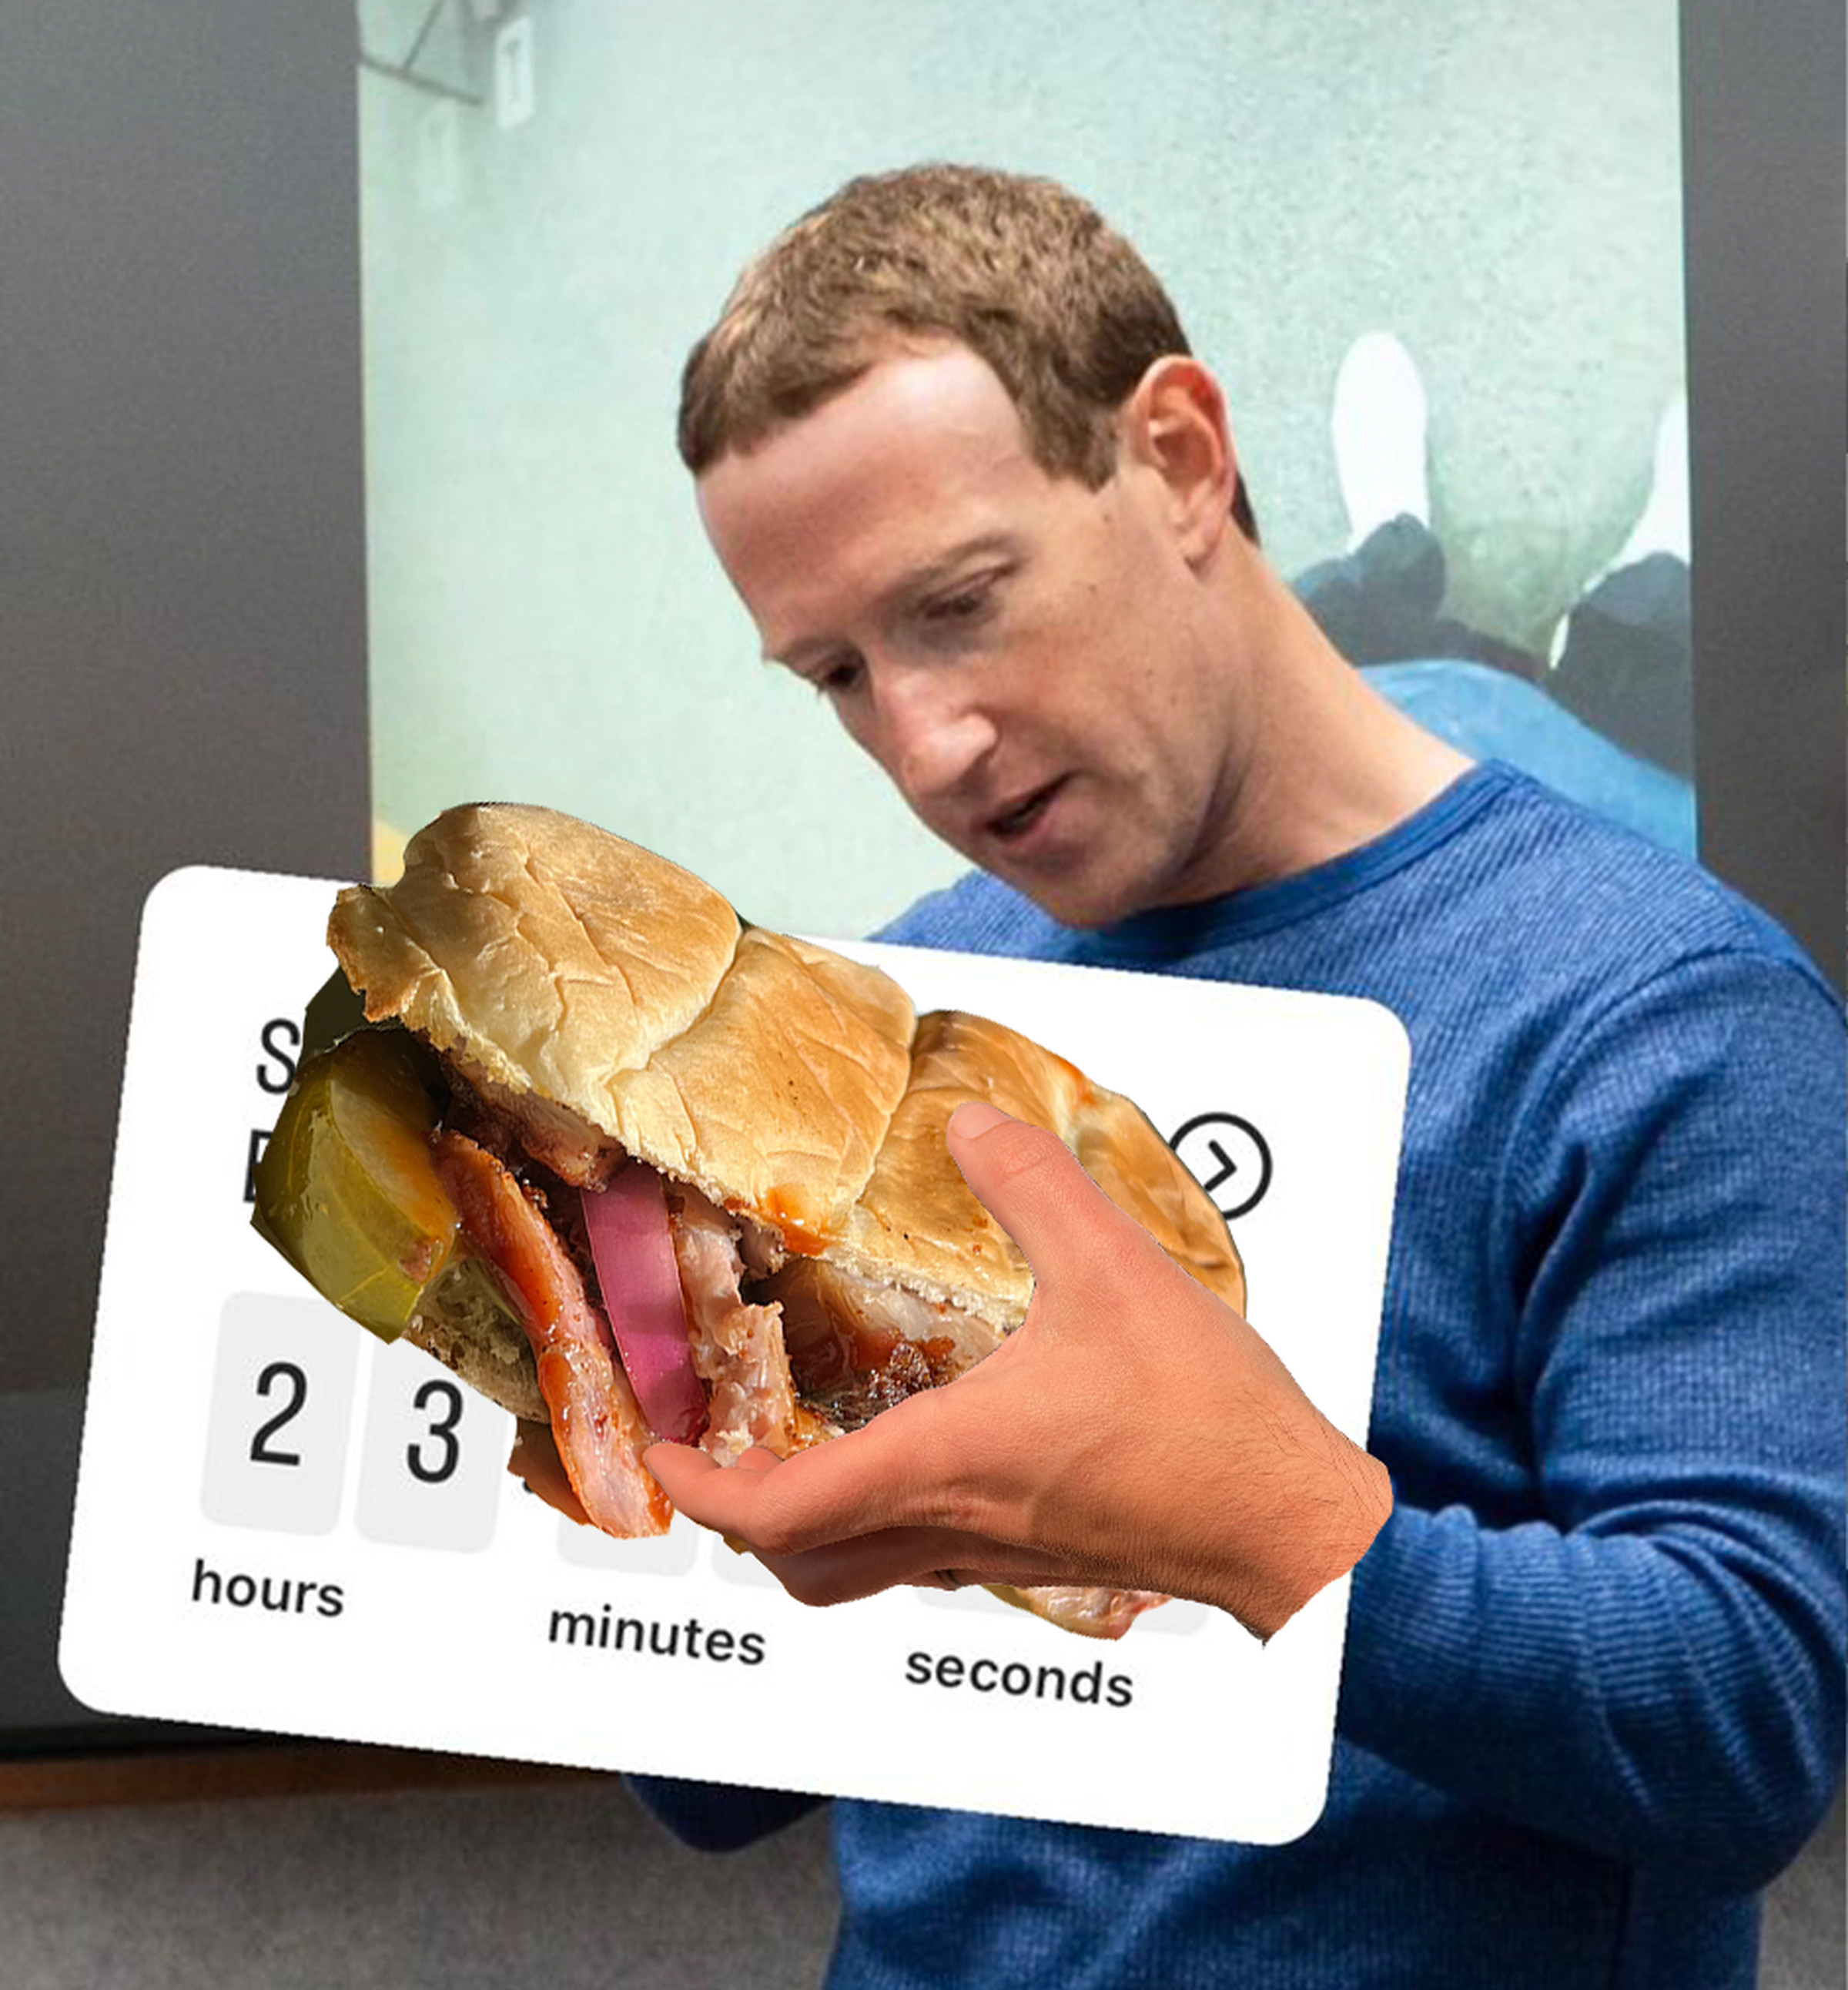 A bad photoshop of Mark Zuckerberg holding a sloppy sandwich